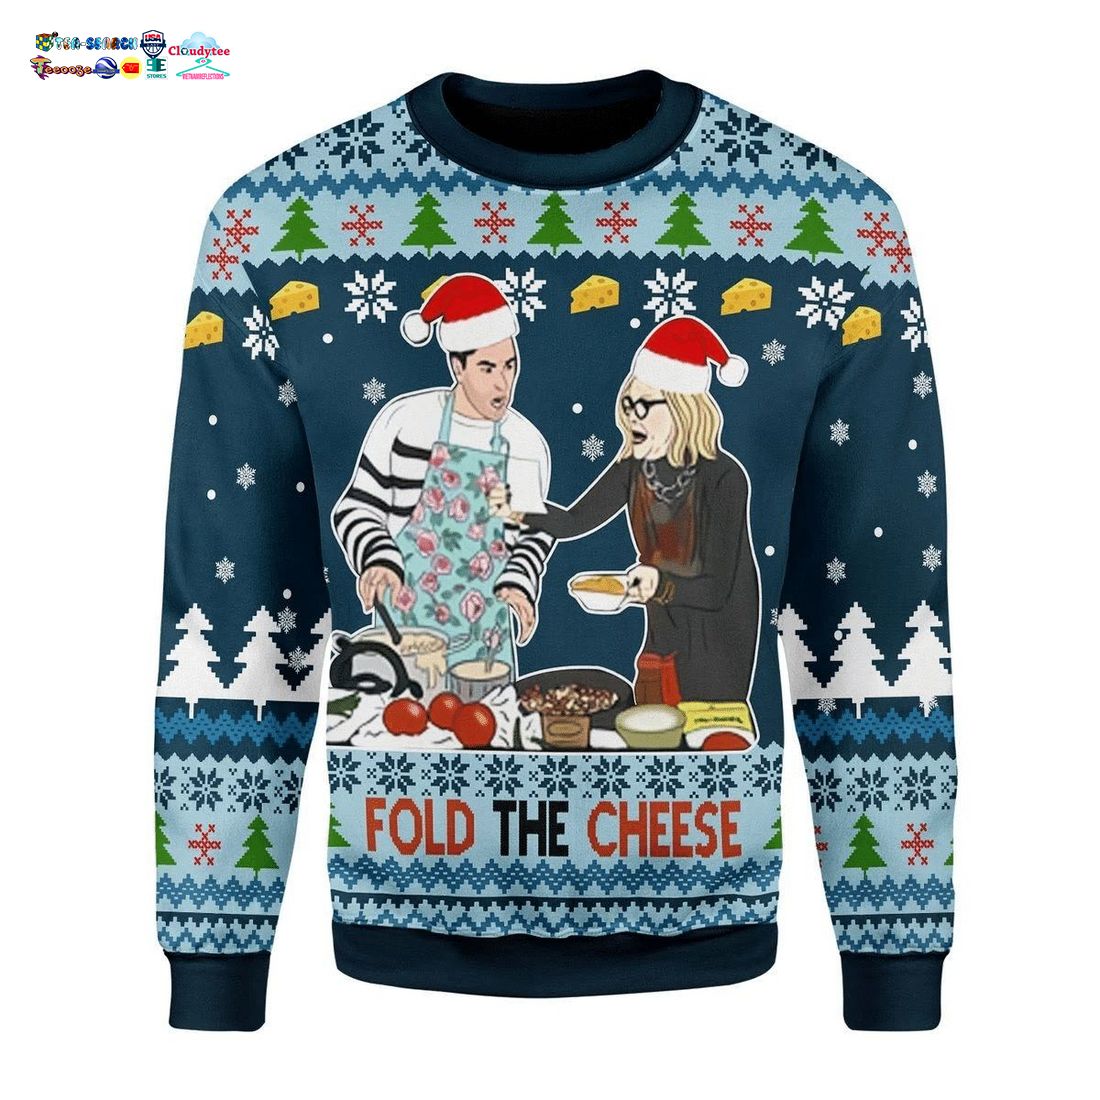 Schitt’s Creek Fold The Cheese Ugly Christmas Sweater